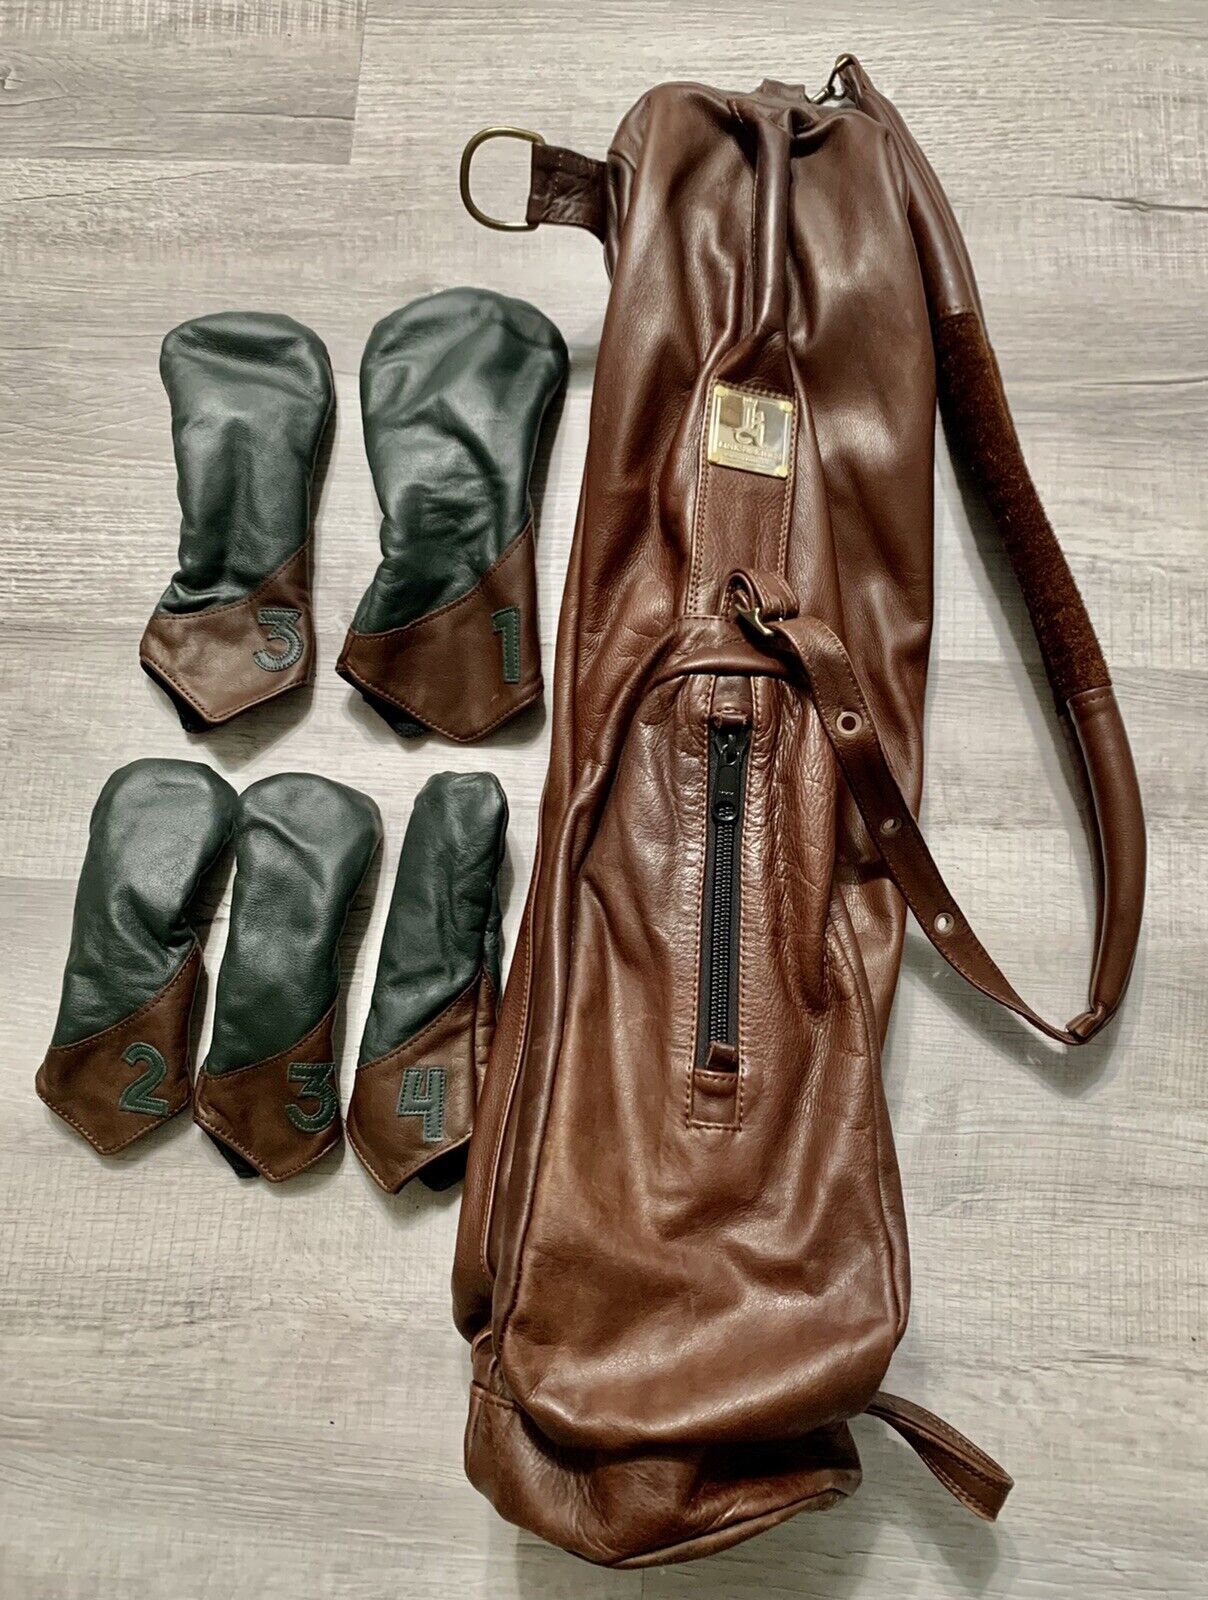 Leather Links & Kings Golf Bag & Head Covers